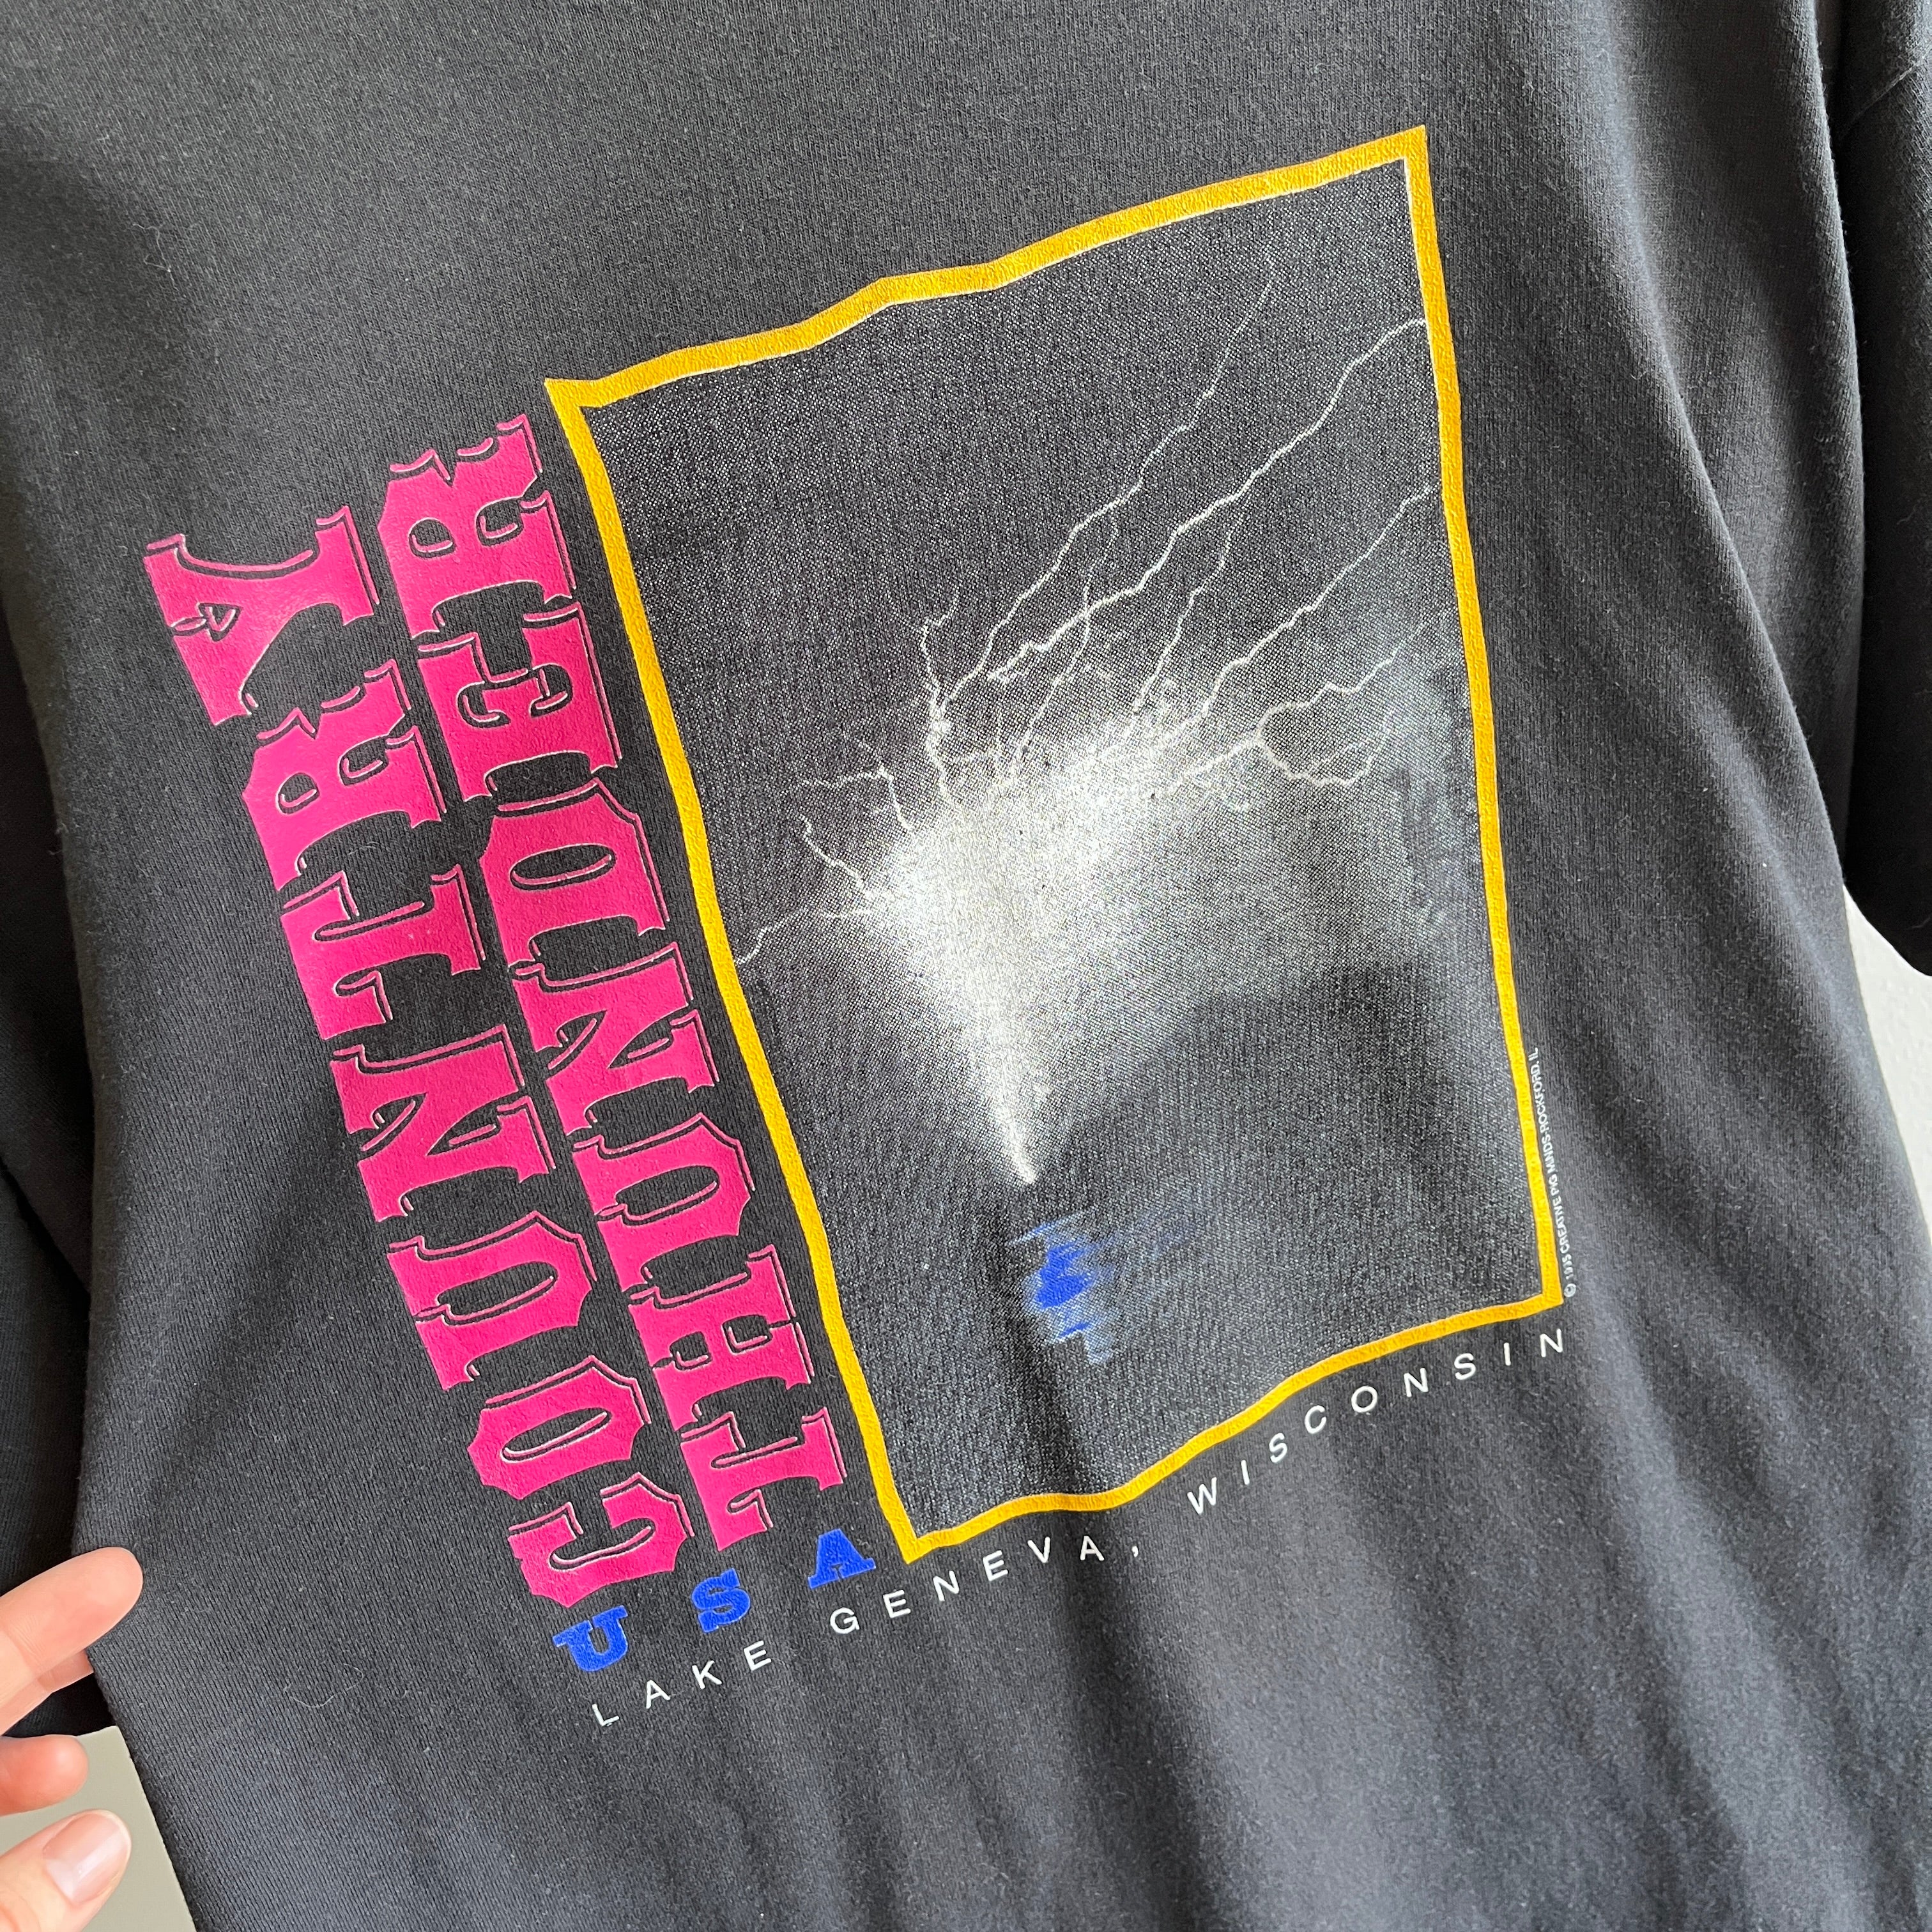 1995 Country Thunder, Lake Geneva, Wisconsin Tour T-Shirt